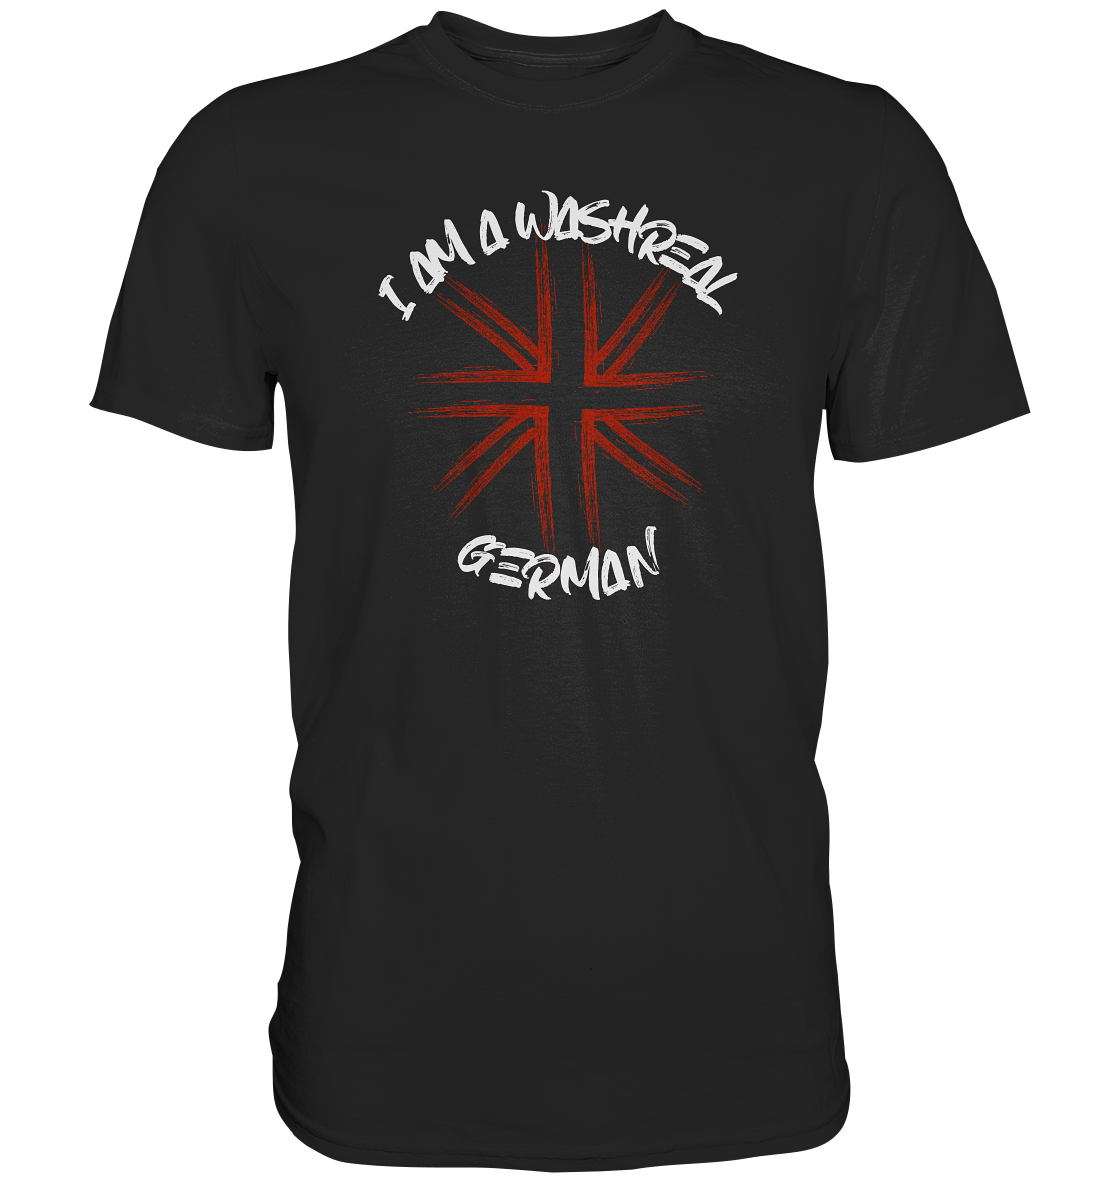 "I am a washreal German" - Premium Shirt